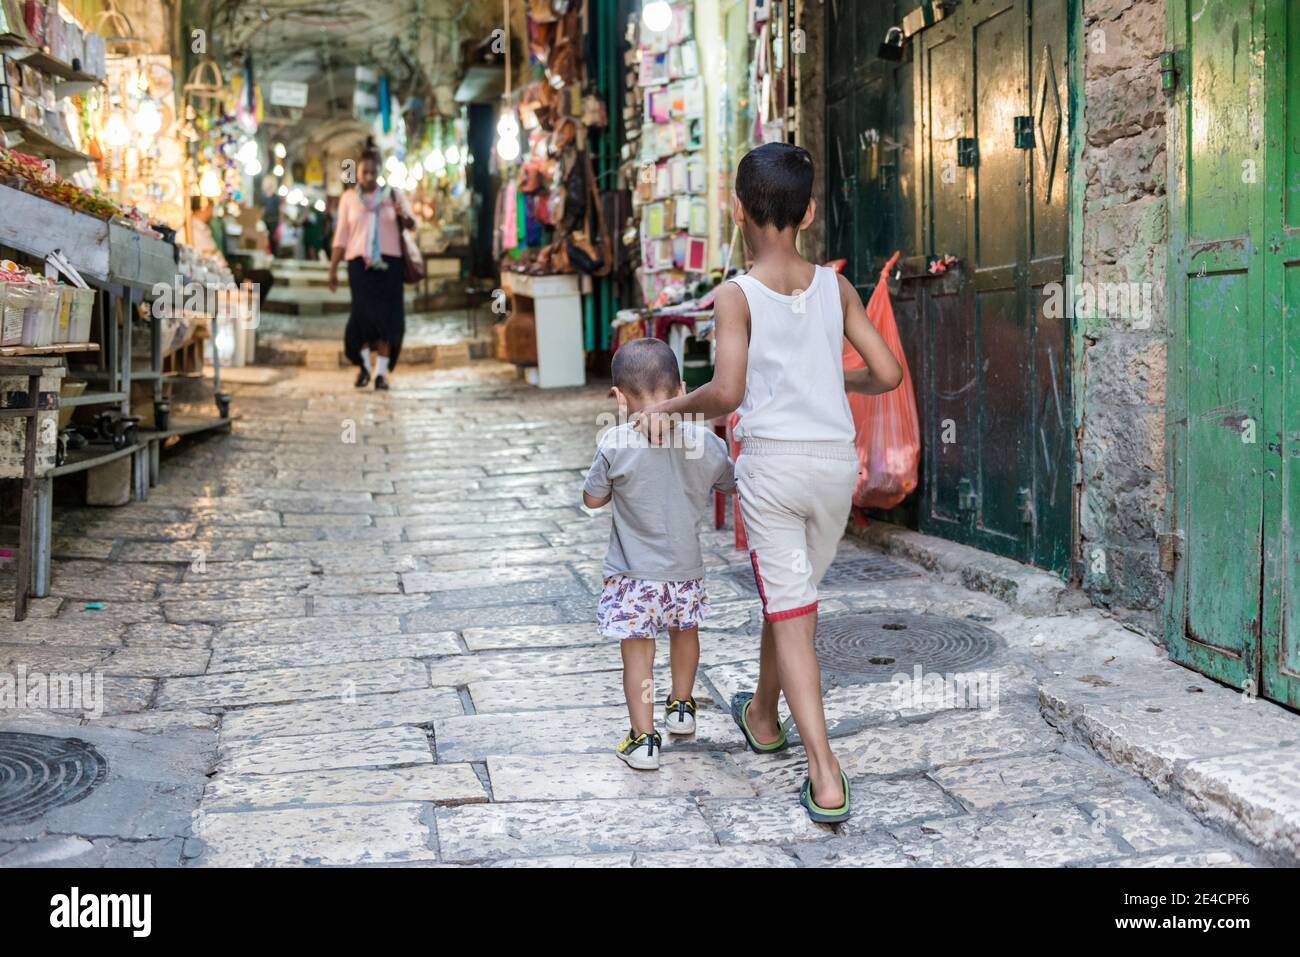 Israel, Jerusalem, Old City, two children run through bazaar Stock Photo